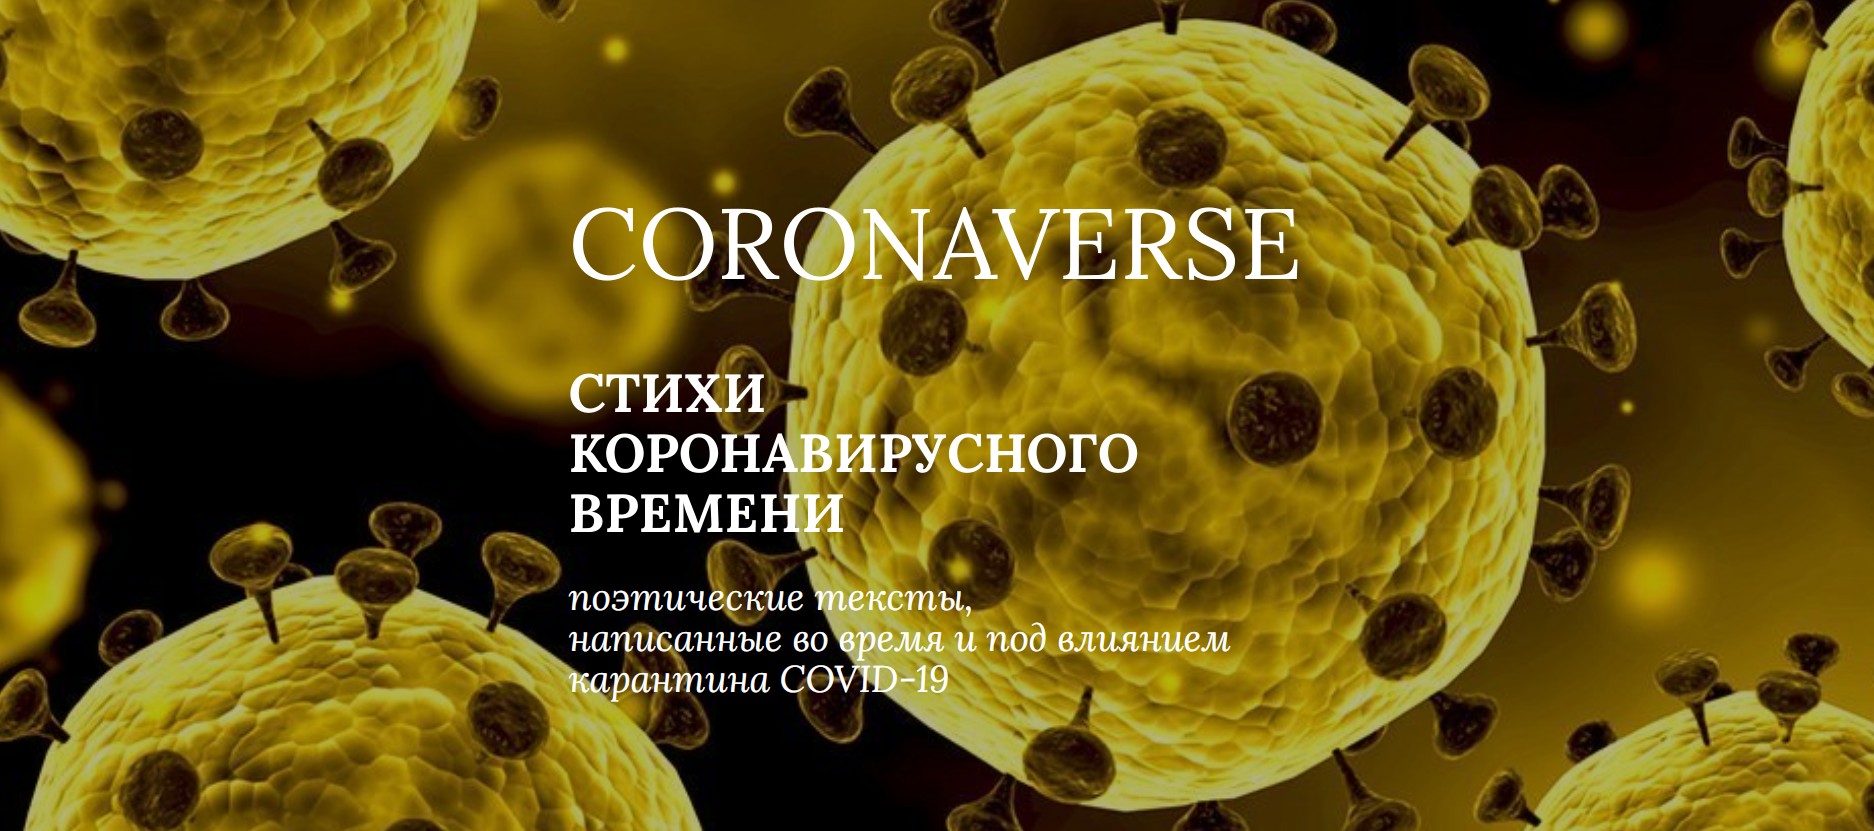 Поэзия мира. «CORONAVERSE — стихи коронавирусного времени»